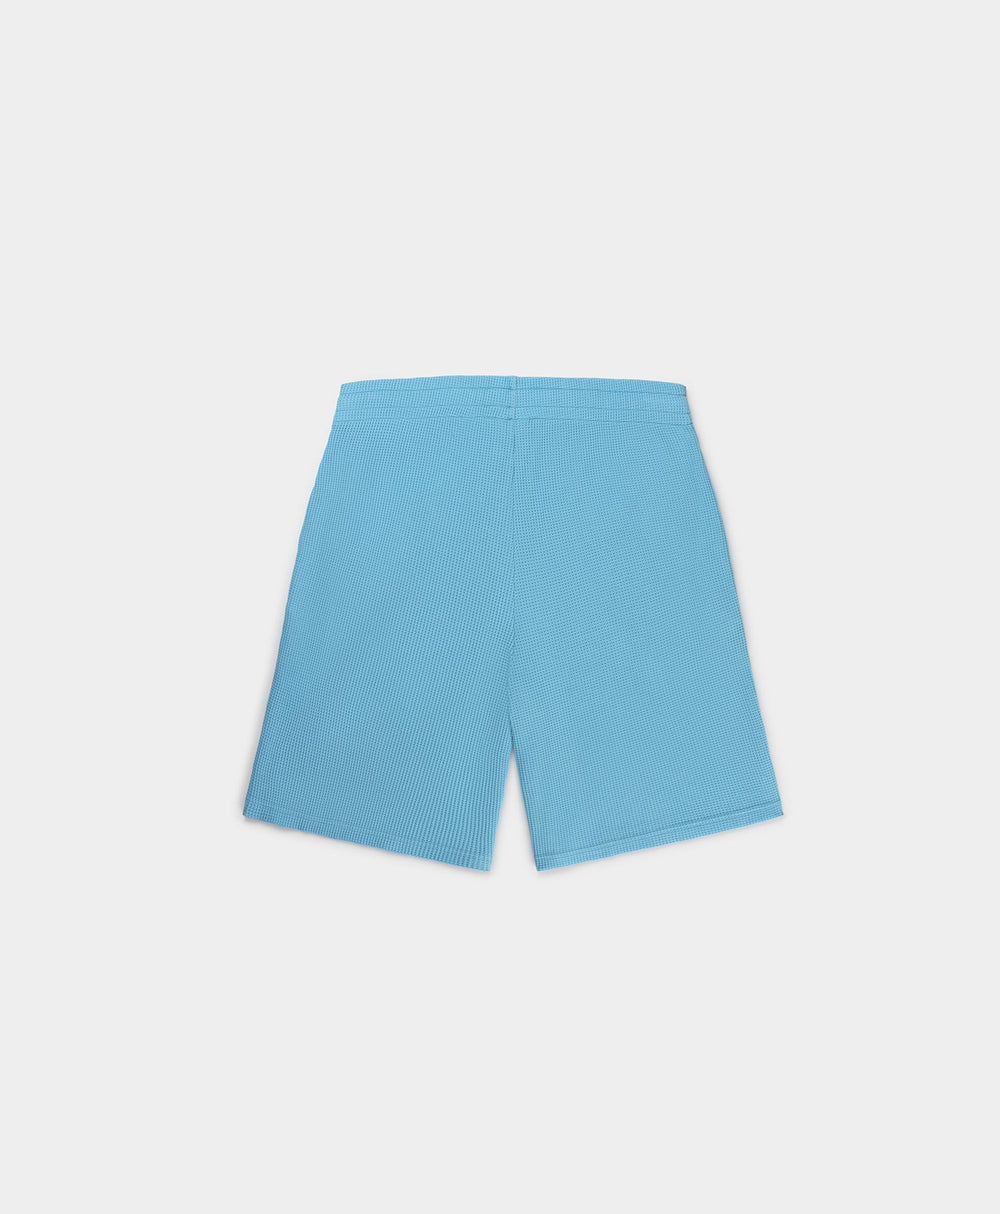 DP - Baby Blue Renzy Shorts - Packshot - Rear